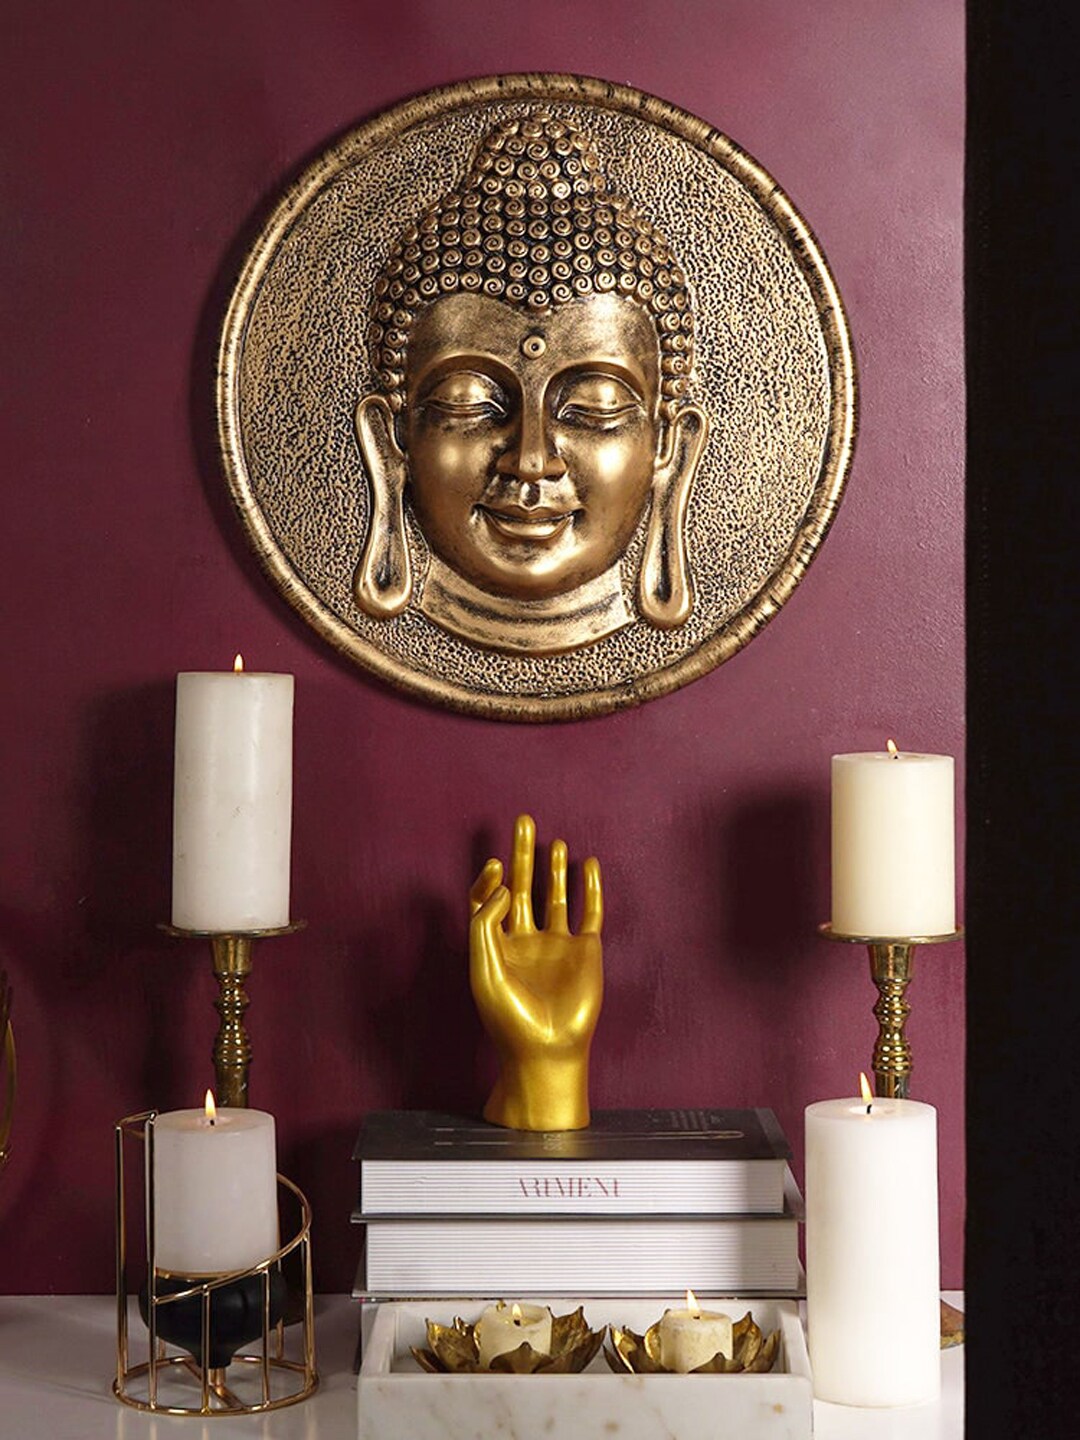 THE ARTMENT Gold Surreal Meditative Buddha Head Price in India